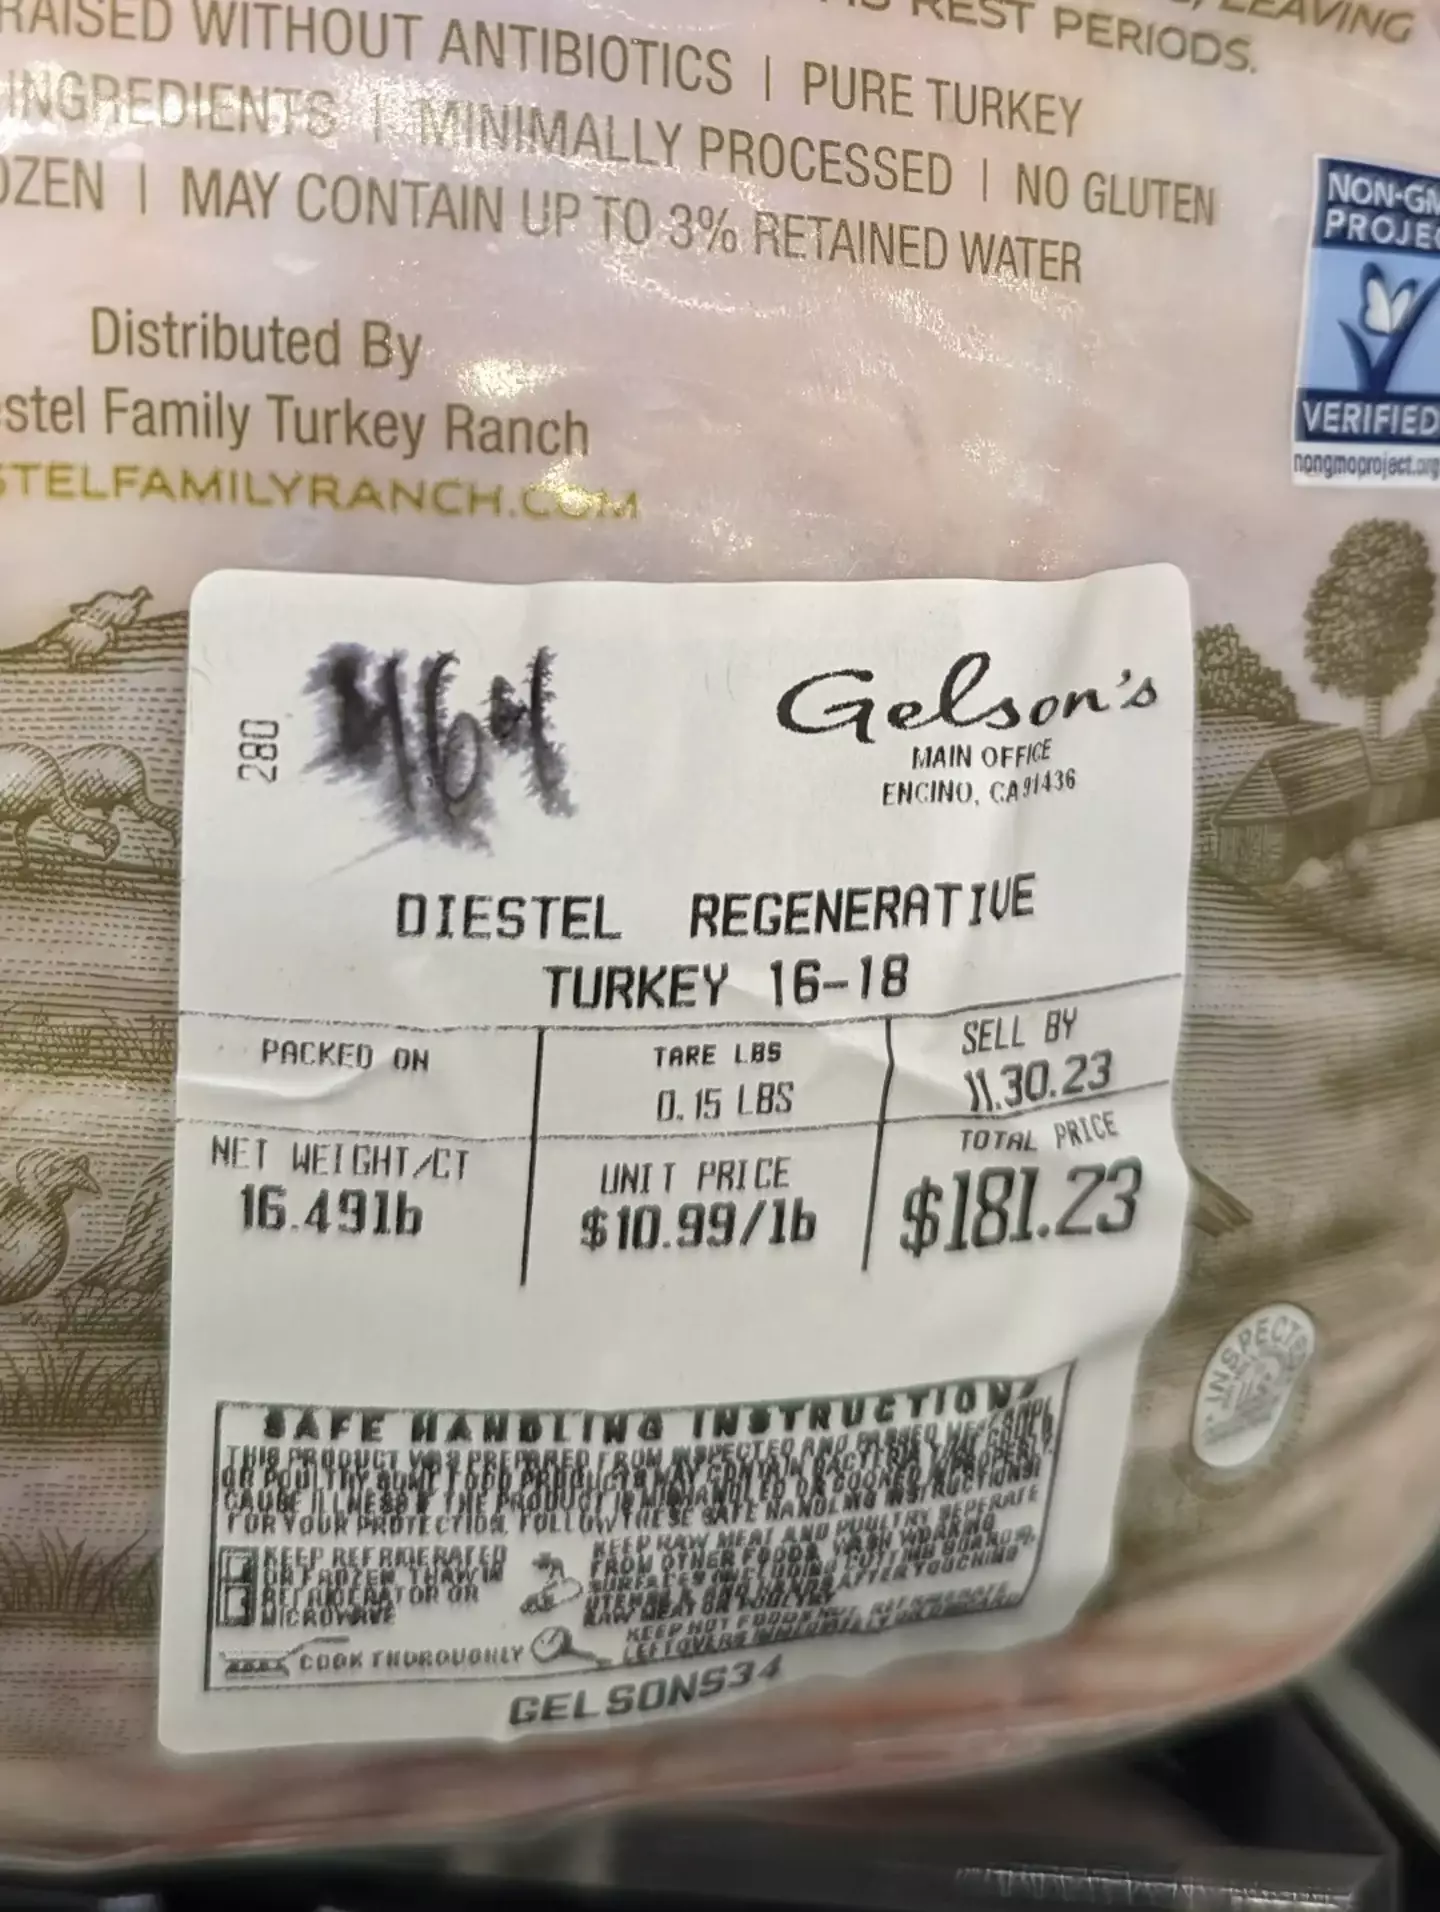 Diestel turkeys retail for the same price on the family farm's website.